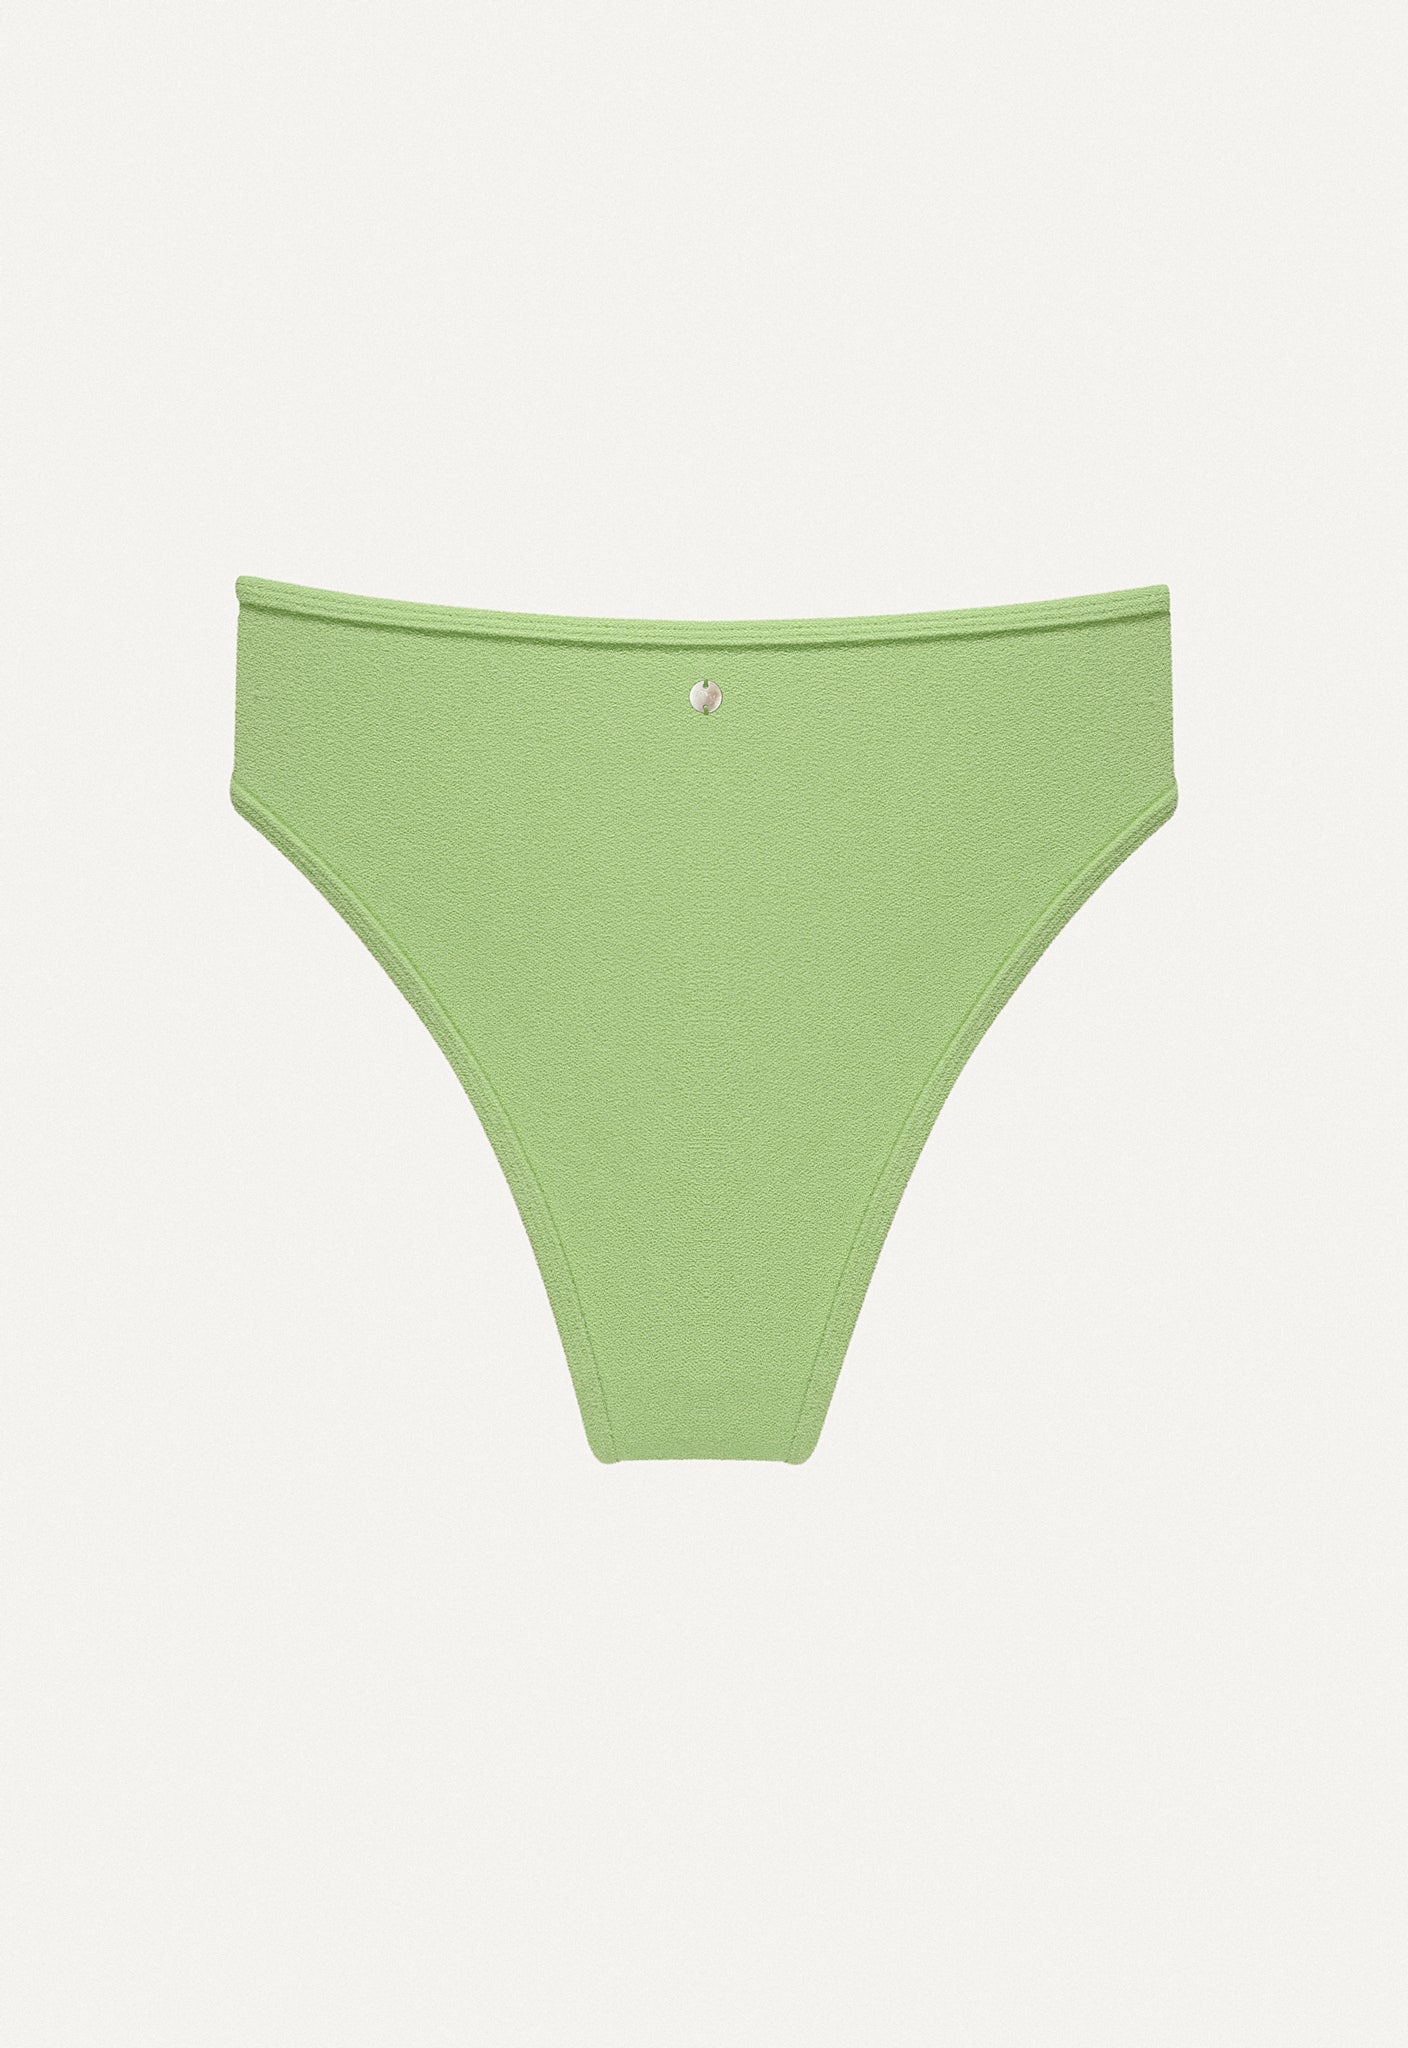 Bikini Bottom "Calima" in linden green terry